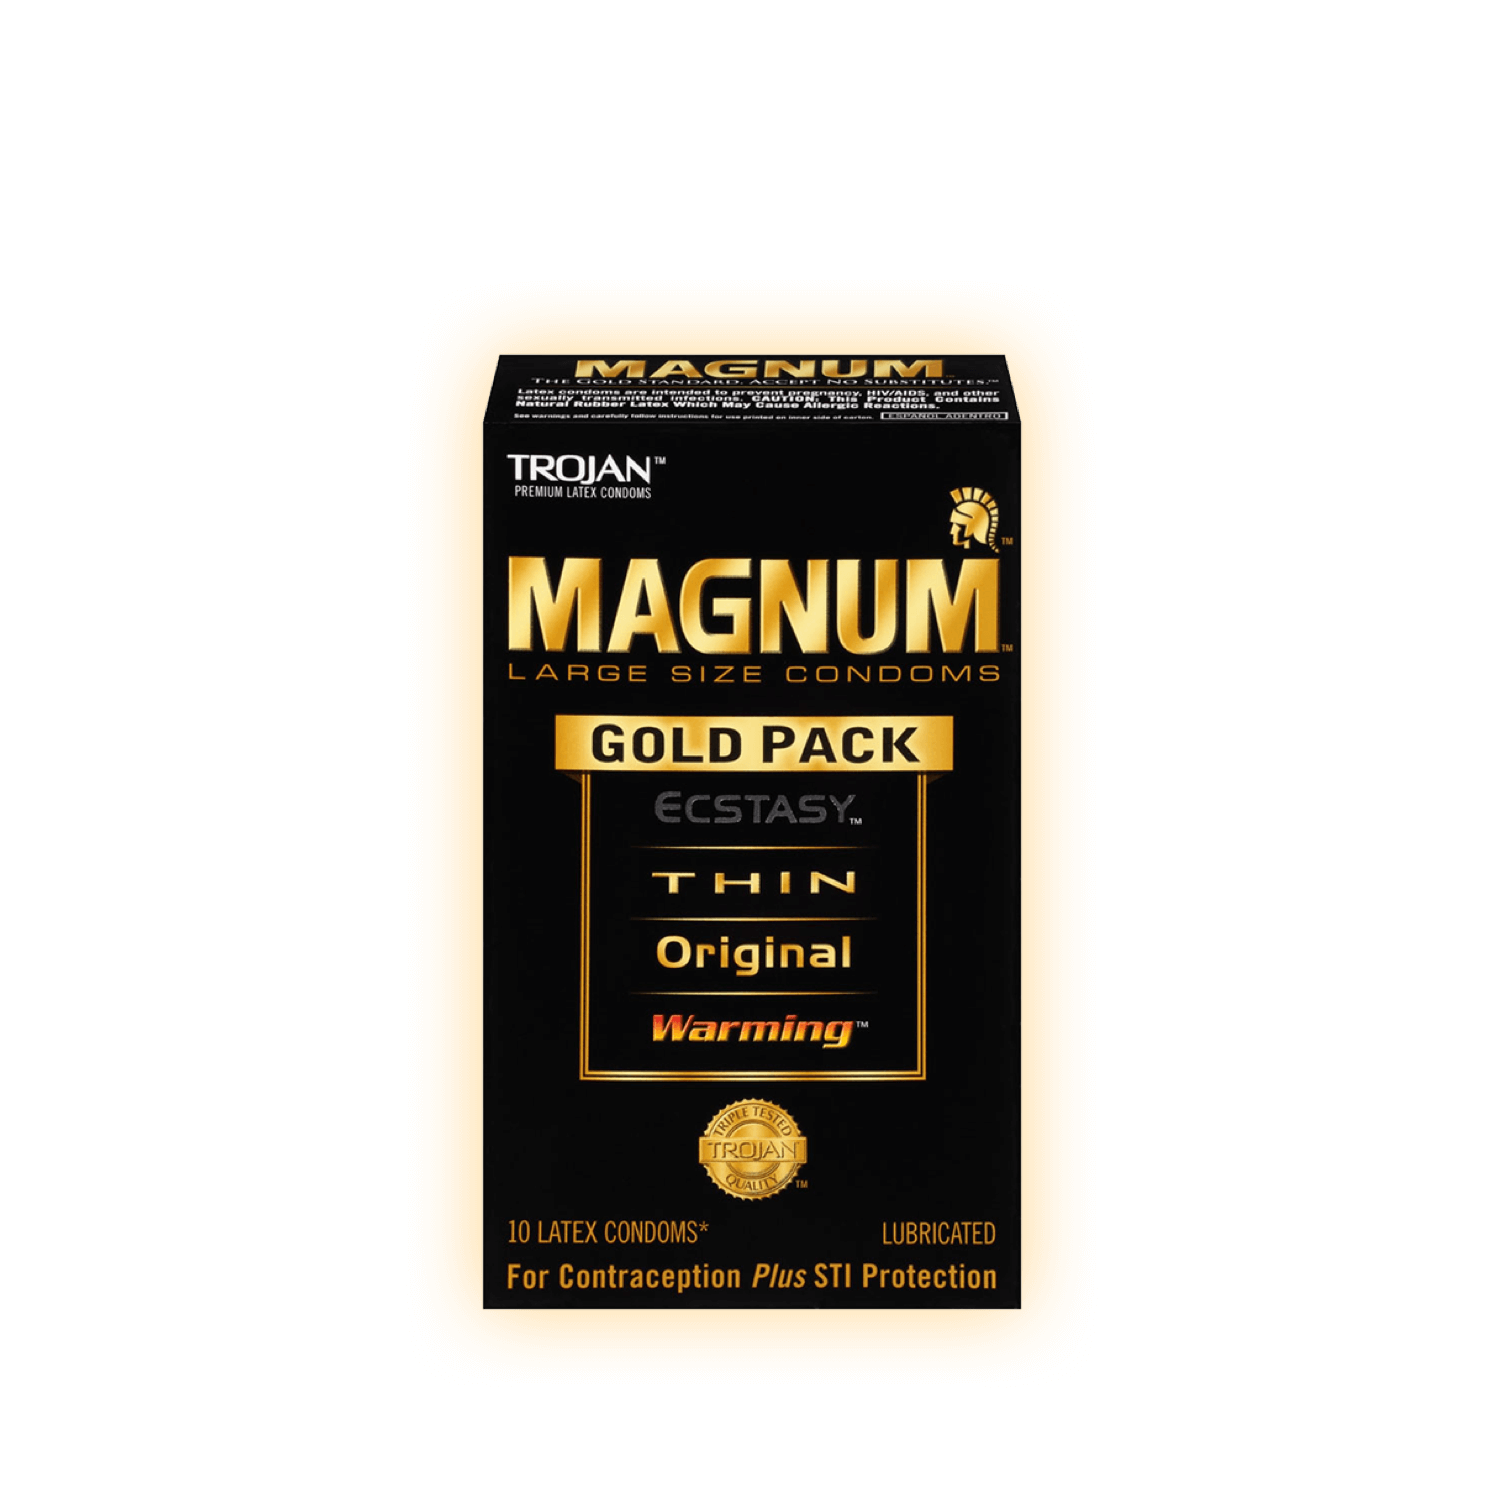 Magnum Condom Gold variety pack.